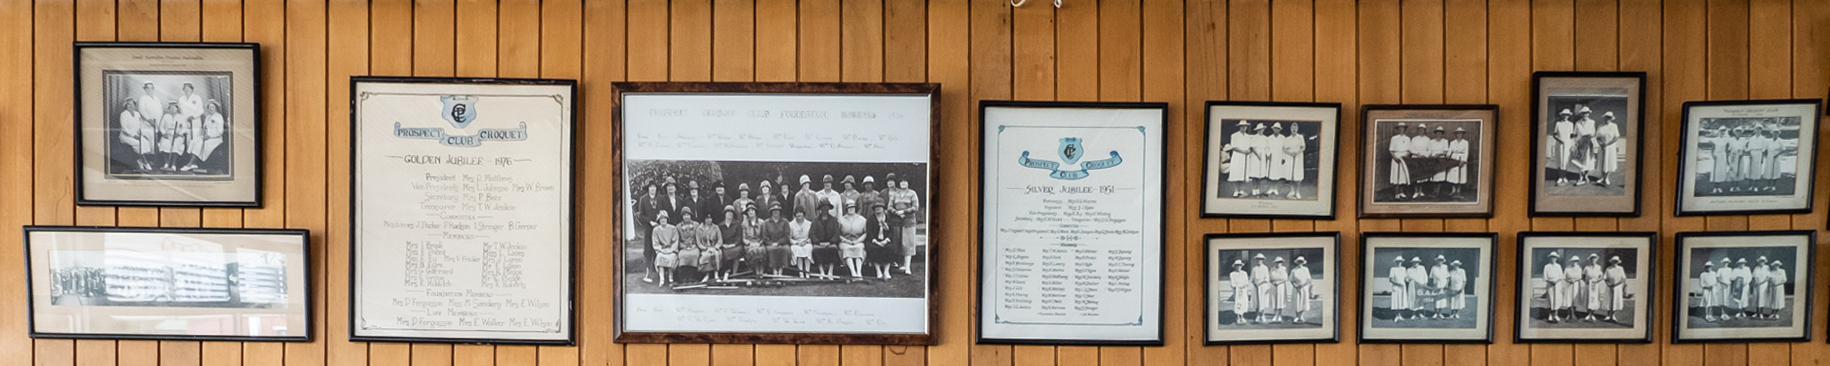 NACC North Adelaide Croquet Club History